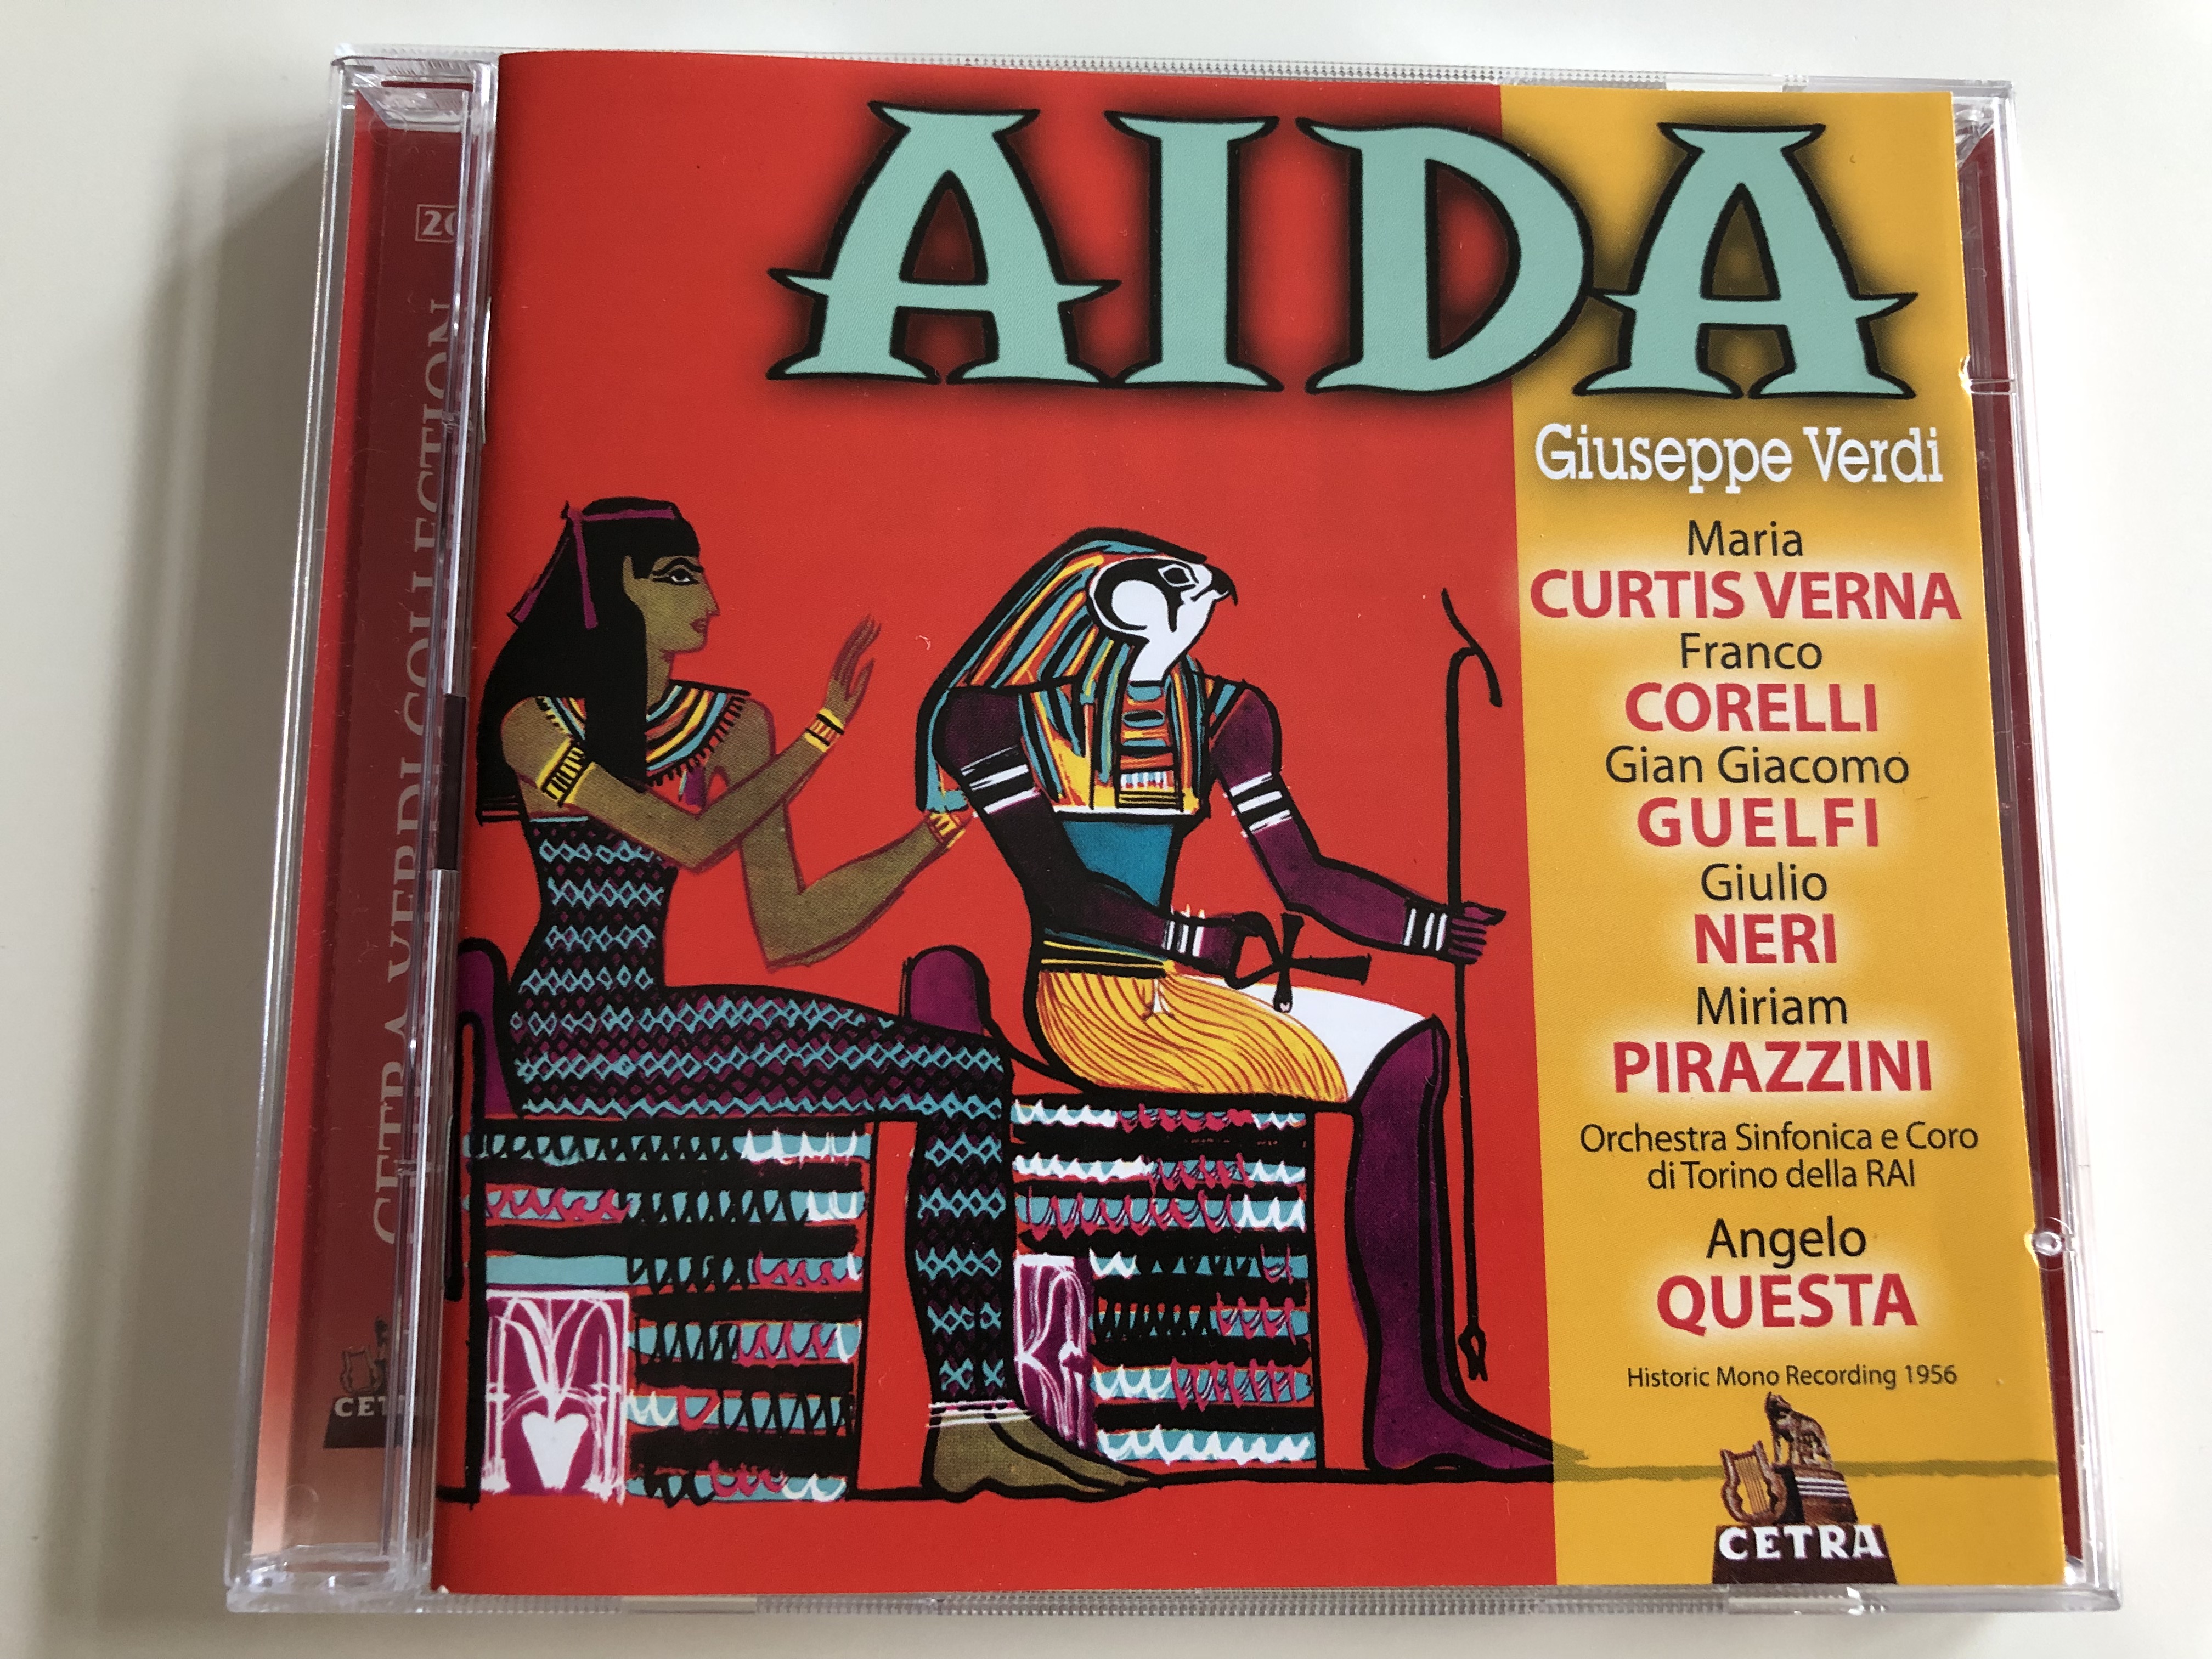 giuseppe-verdi-aida-cetra-verdi-collection-warner-music-italy-audio-cd-2012-2564-66211-8-1-.jpg